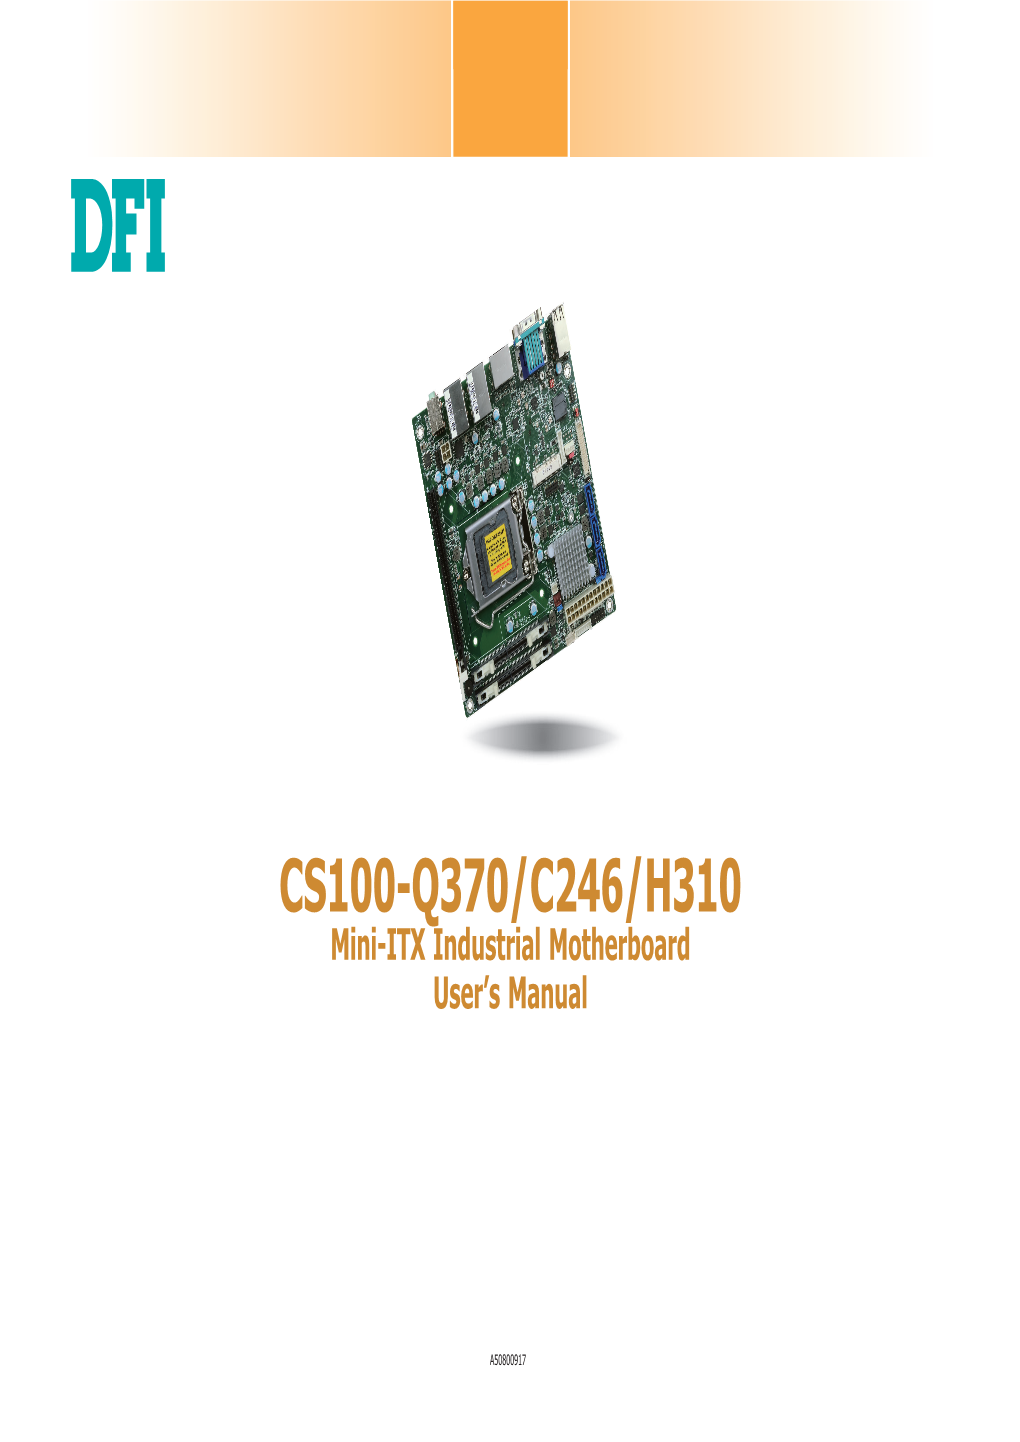 CS100-Q370/C246/H310 Mini-ITX Industrial Motherboard User’S Manual